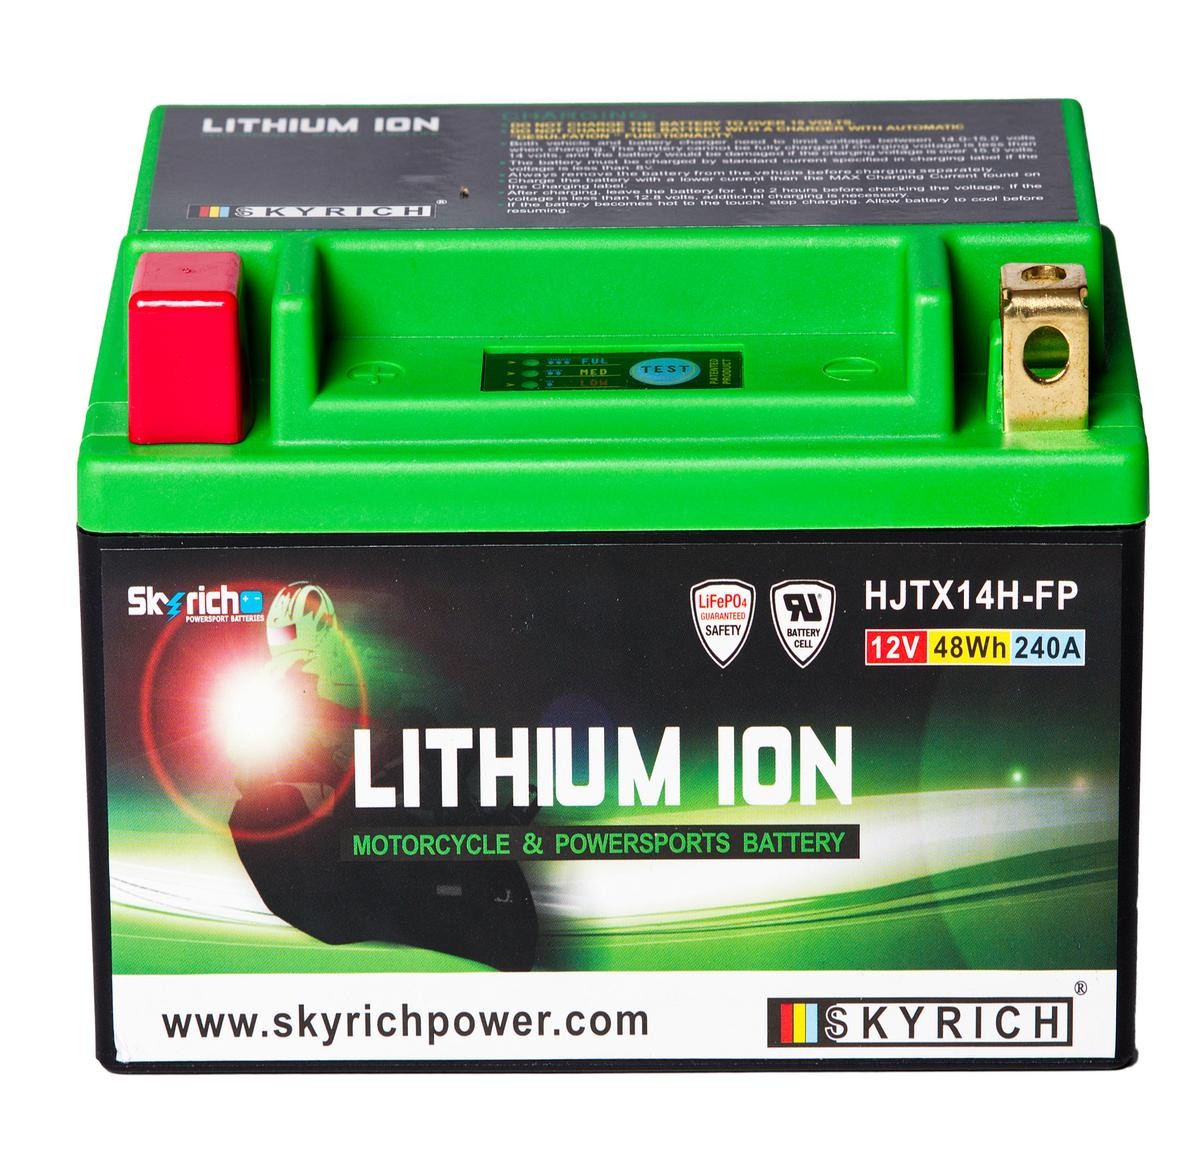 SKYRICH LITHIUM ION Batterie 12V 4Ah 240A N Li-Ionen-Batterie HJTX14H-FP TRIUMPH Mofa Maxi-Scooter